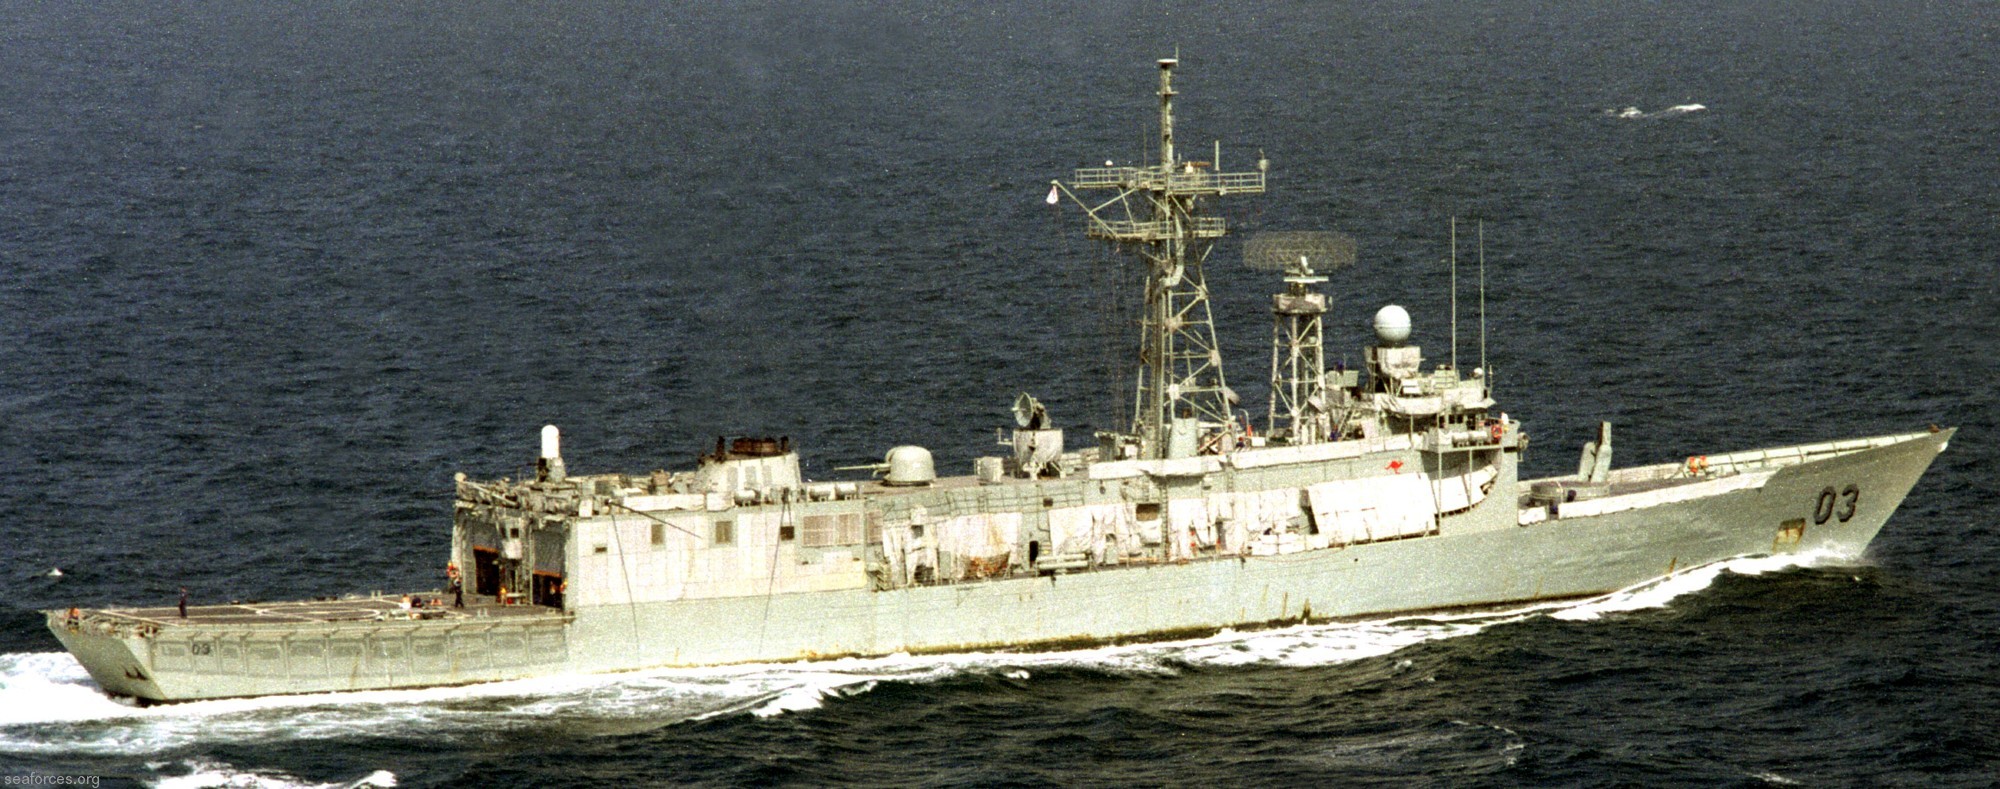 ffg-03 hmas sydney adelaide class frigate royal australian navy 1991 17 operation desert storm shield